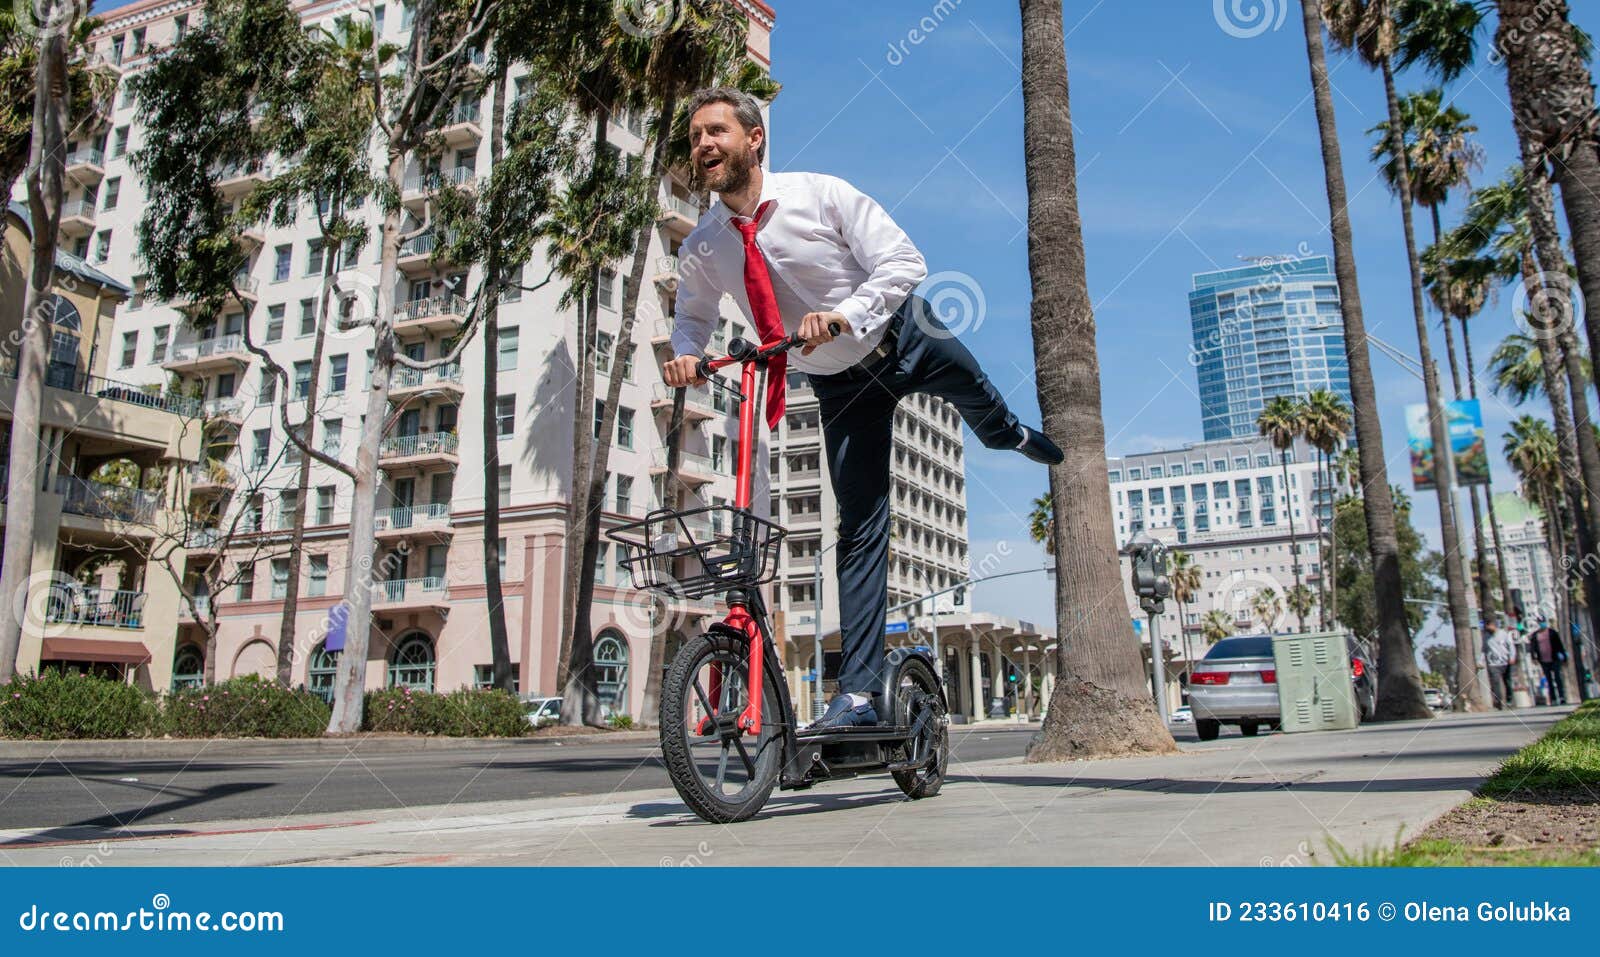 happy employer in formalwear have fun riding escooter on sidewalk, recreation